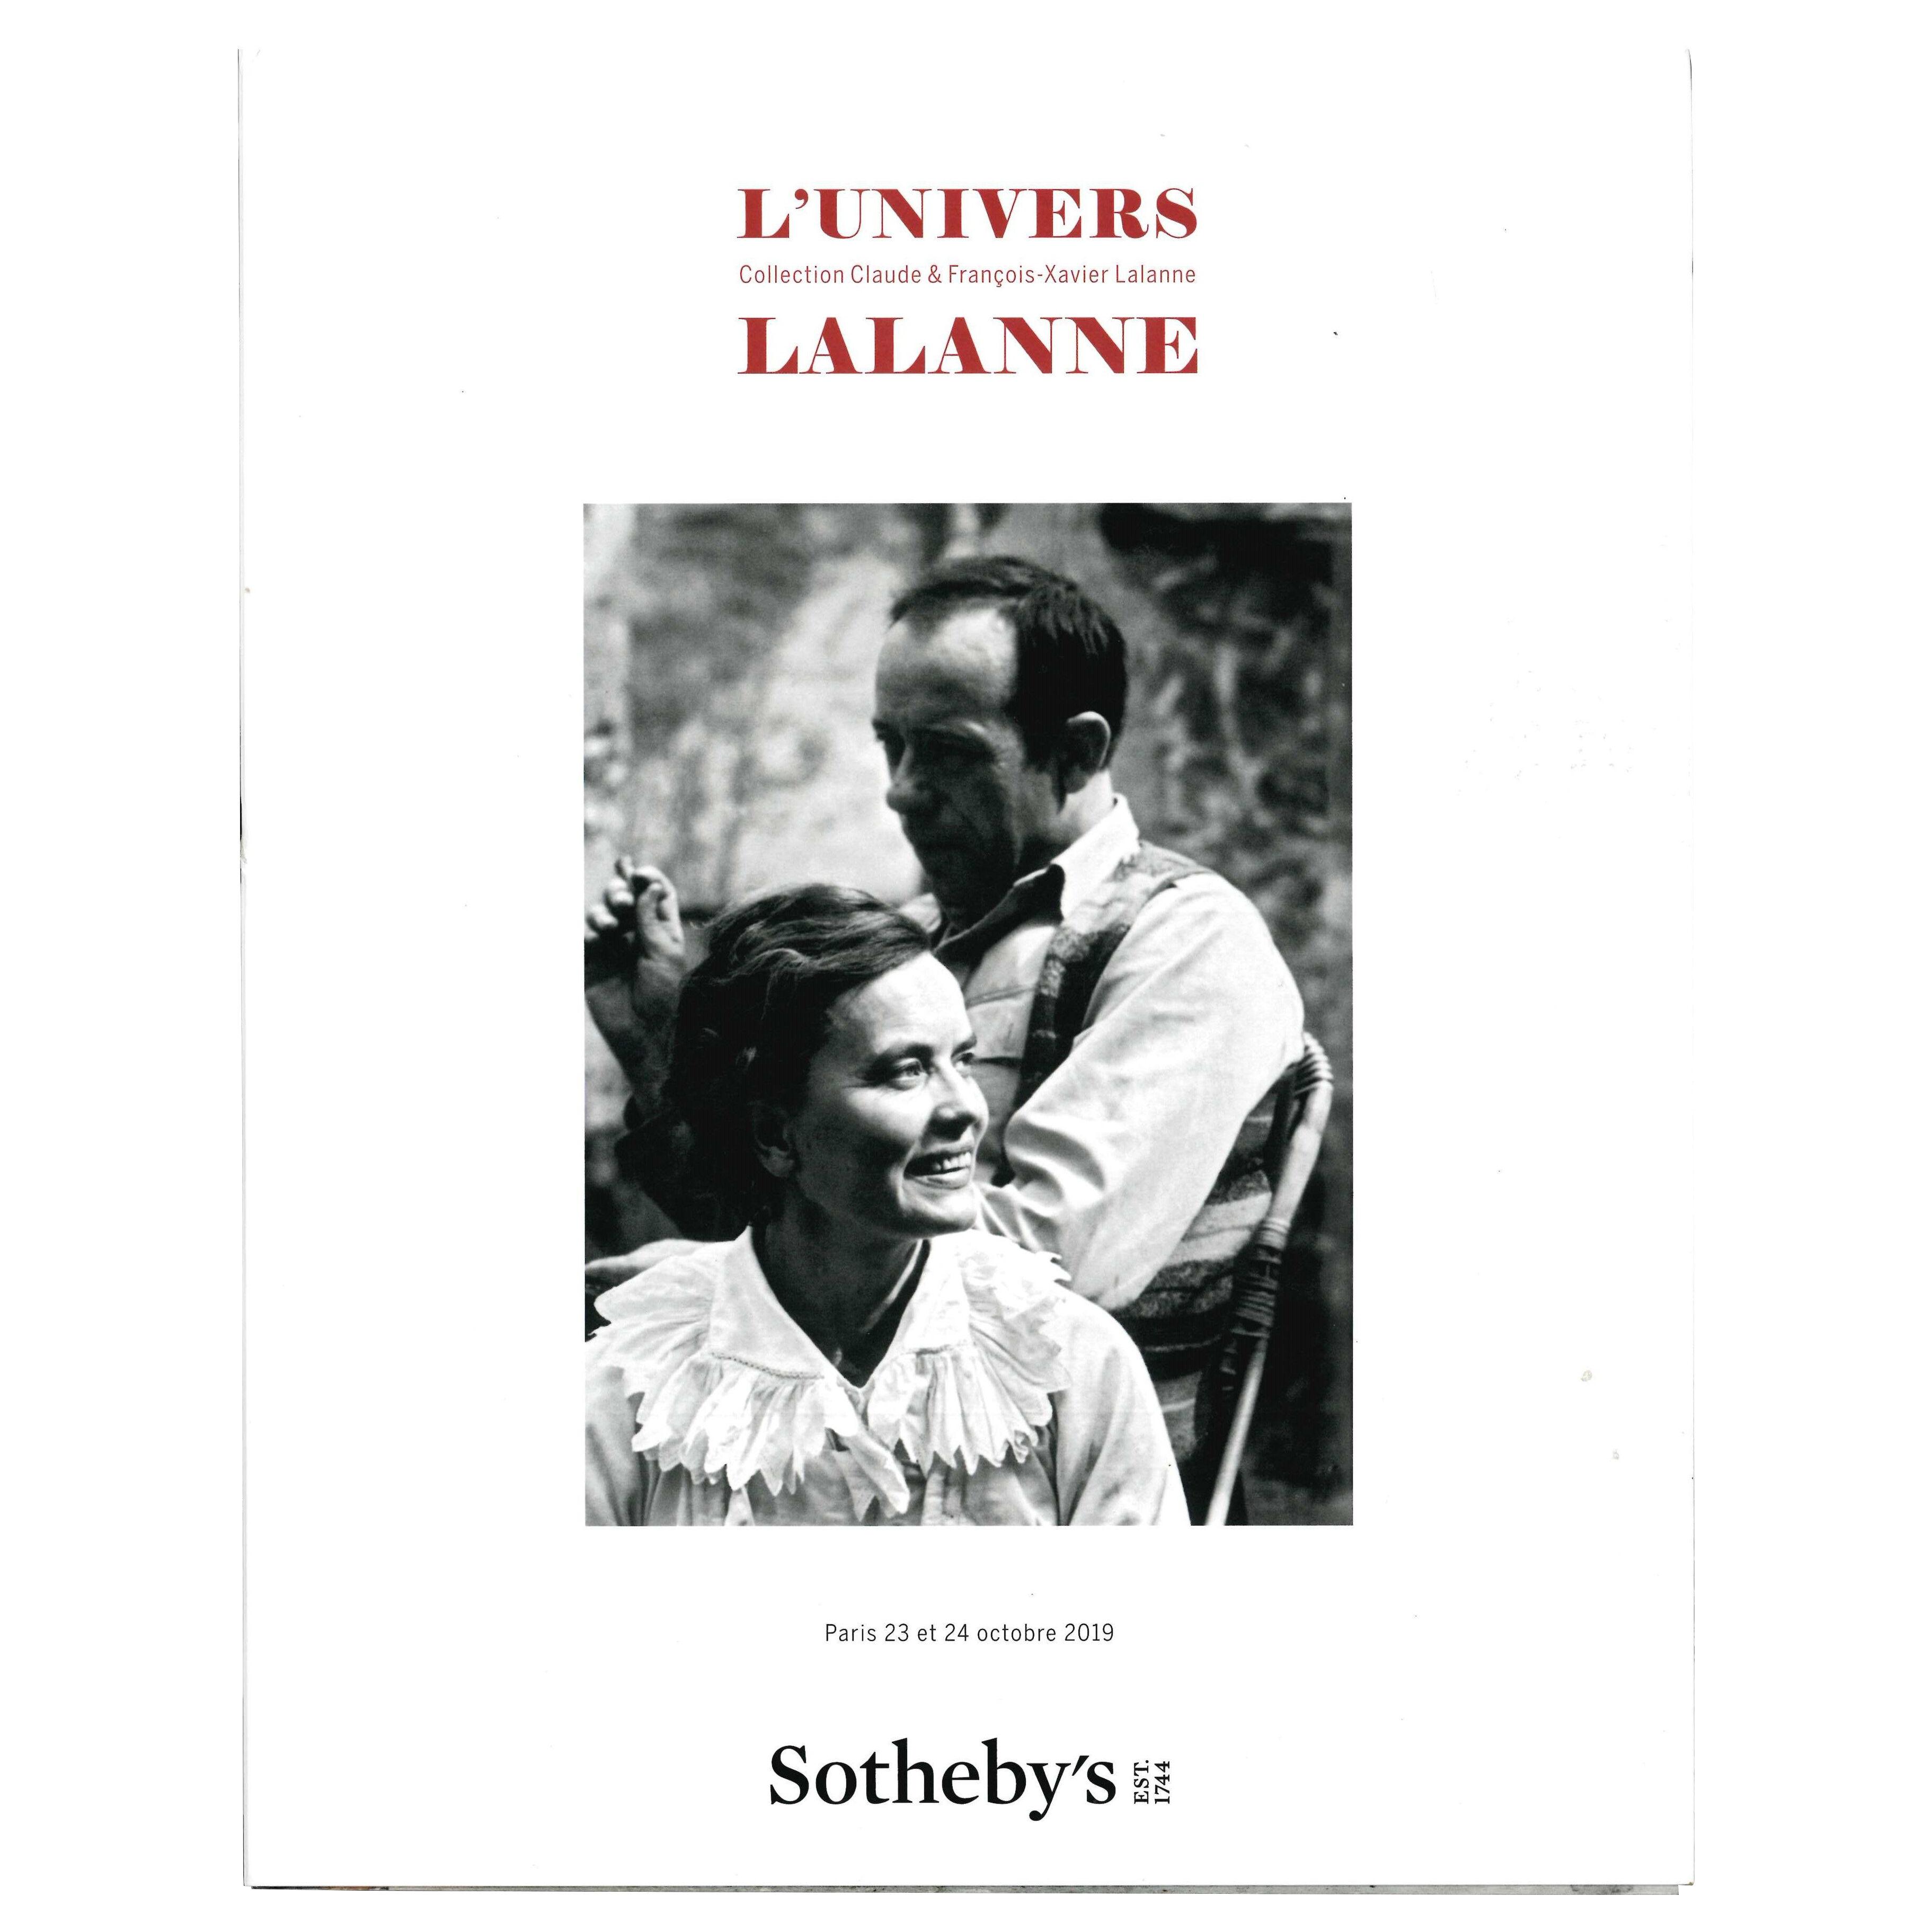 L'UNIVERS LALANNE - SOTHEBY'S 2019 COLLECTION Claude & Francois-Xavier. Book